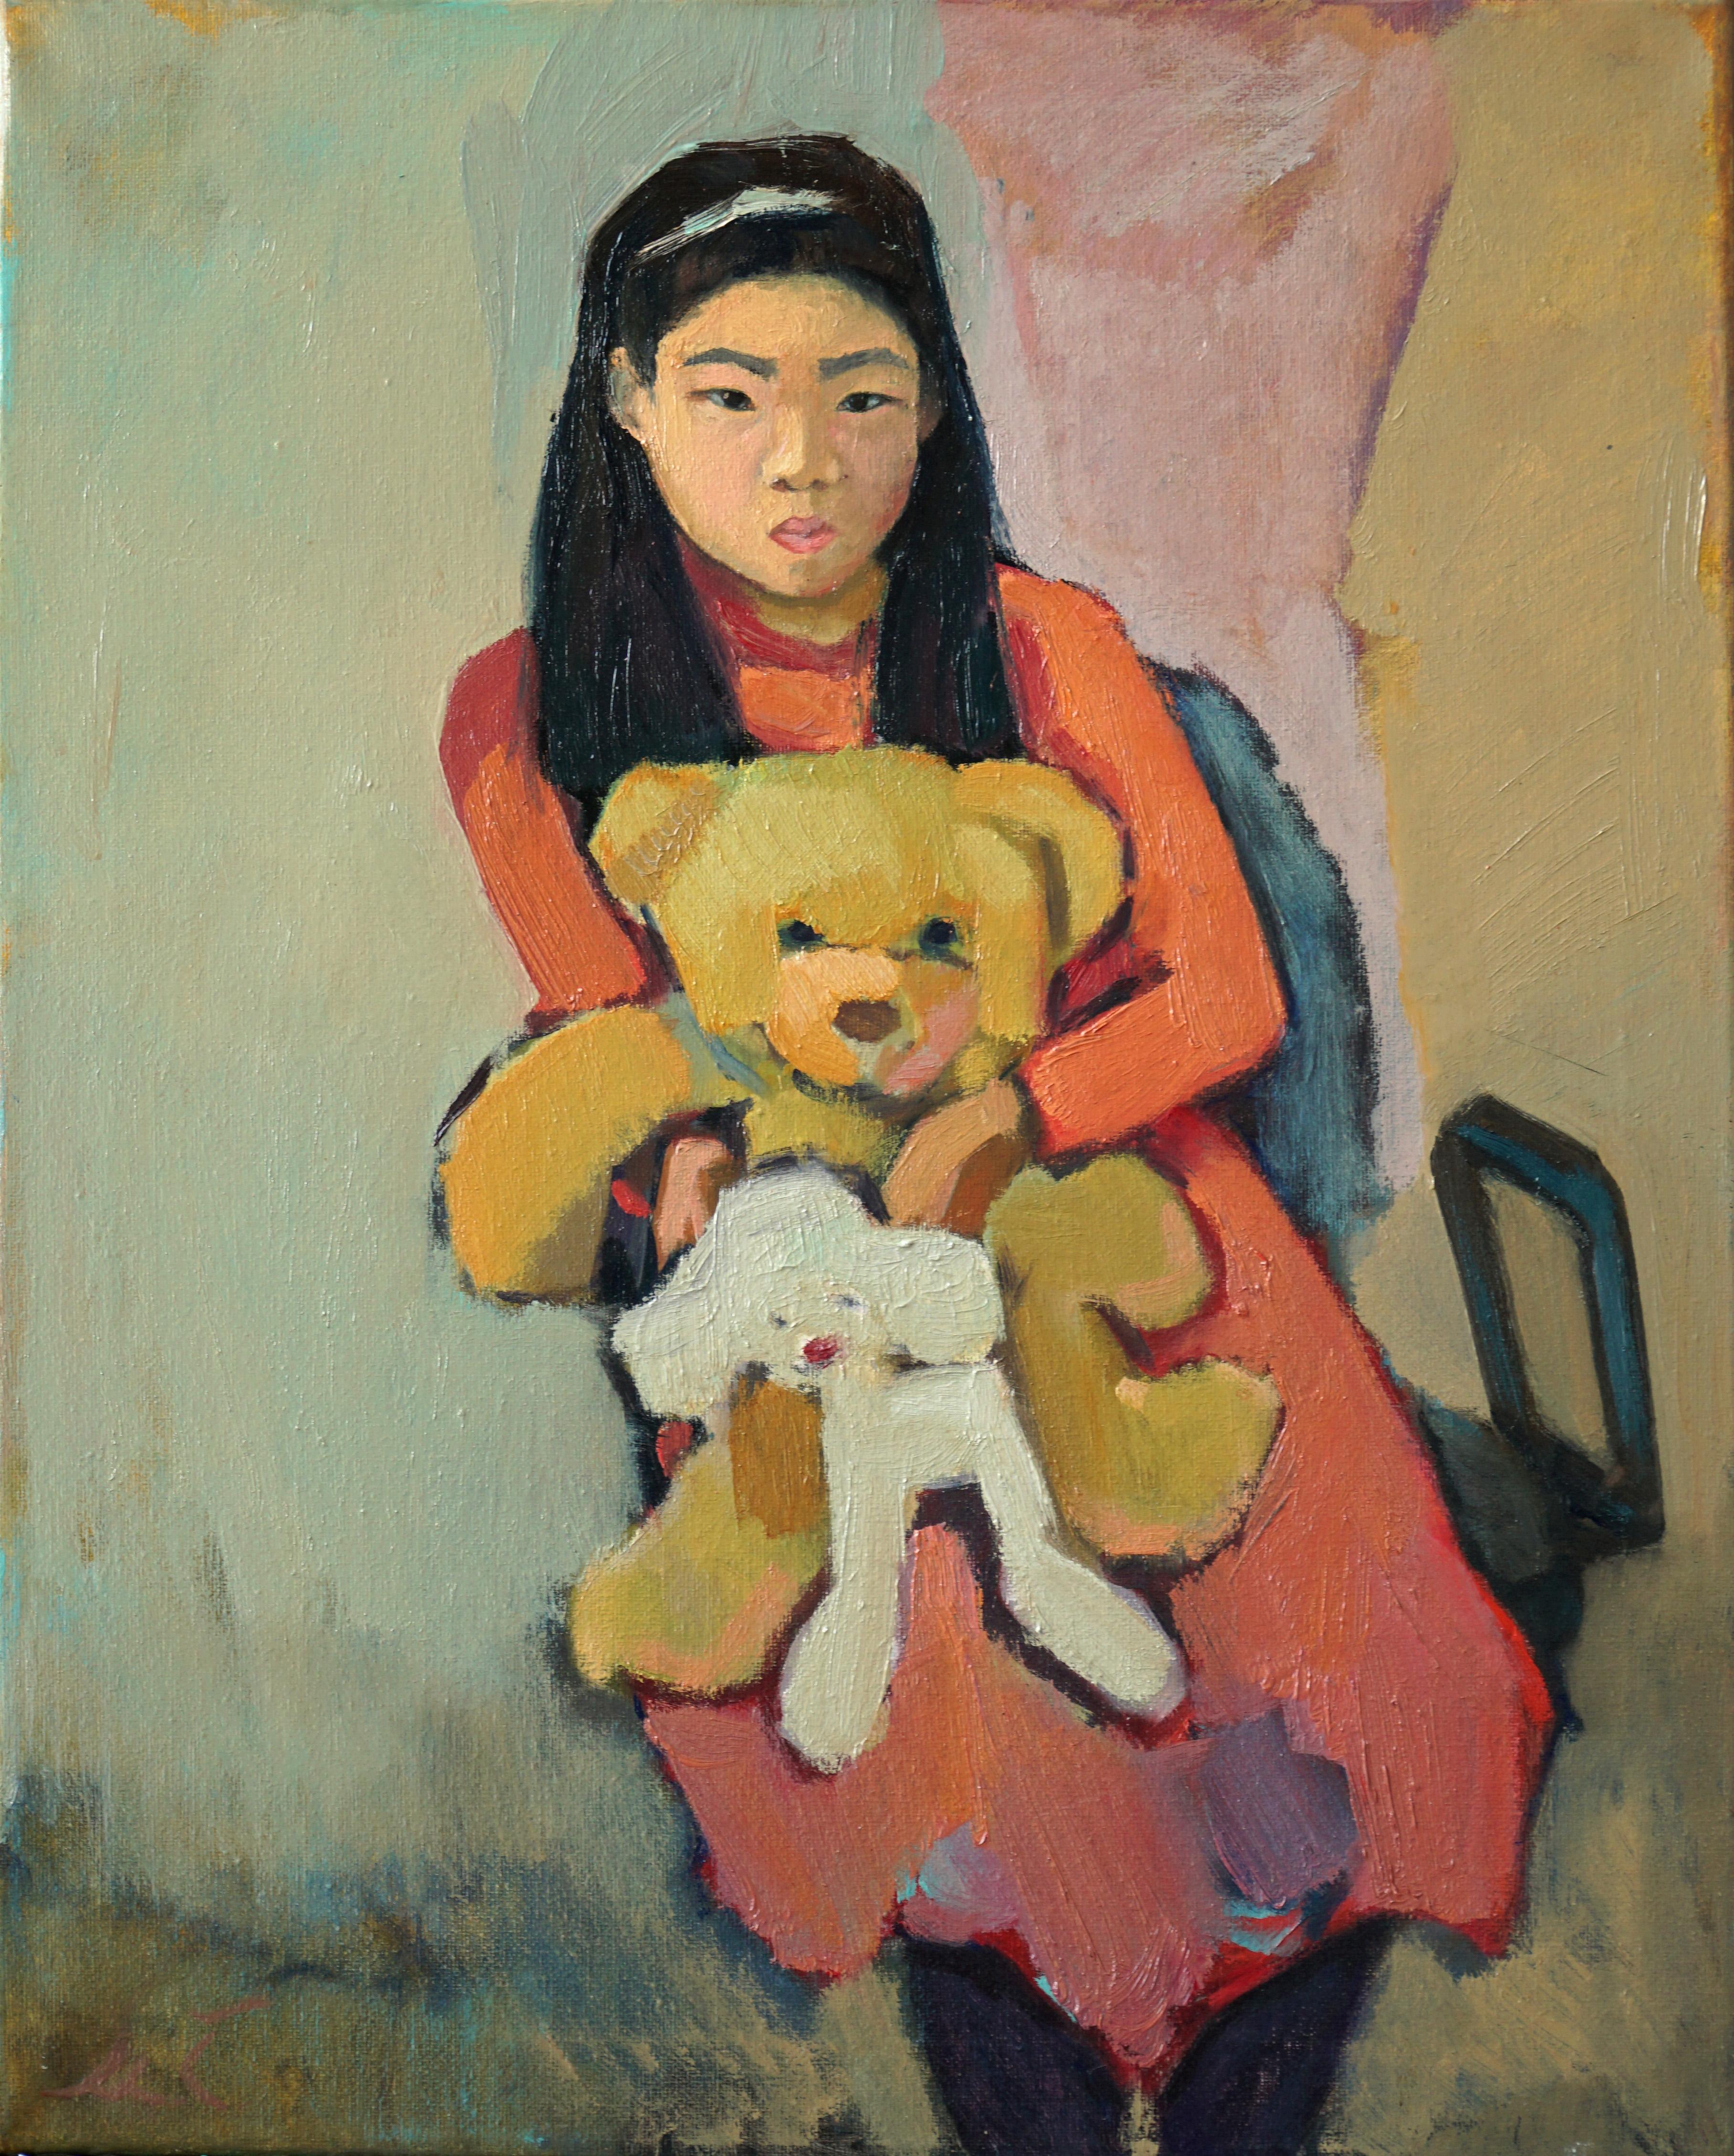 Maria Matveyeva Portrait Painting - Asian girl portrait Teddy bear innocence toys pink soft colors fine art classic